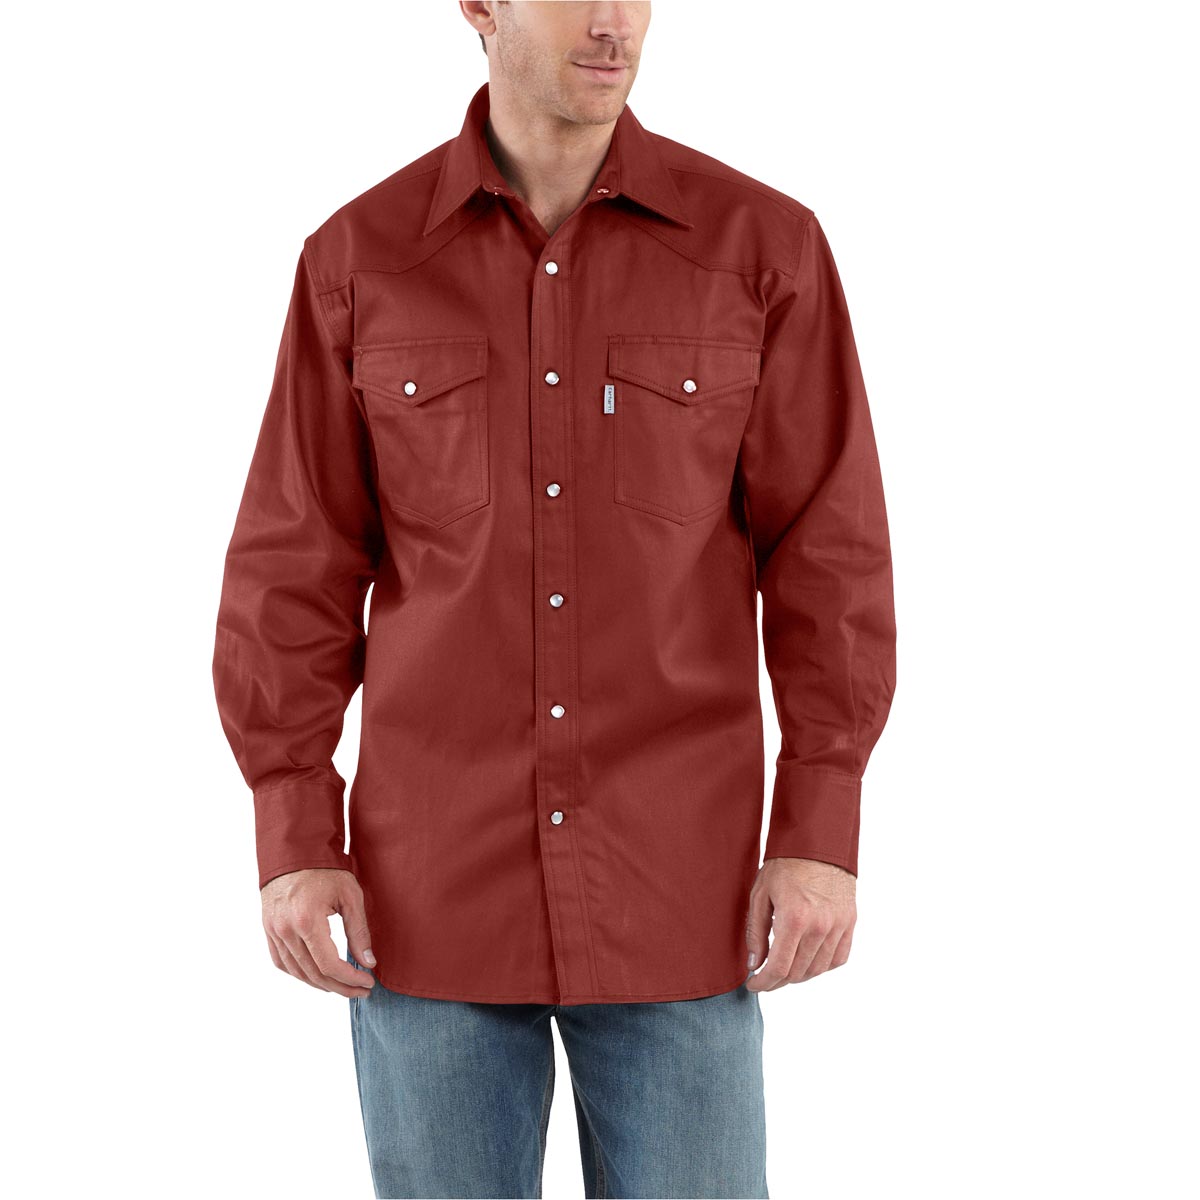 Carhartt Men's Ironwood Twill Work Shirt